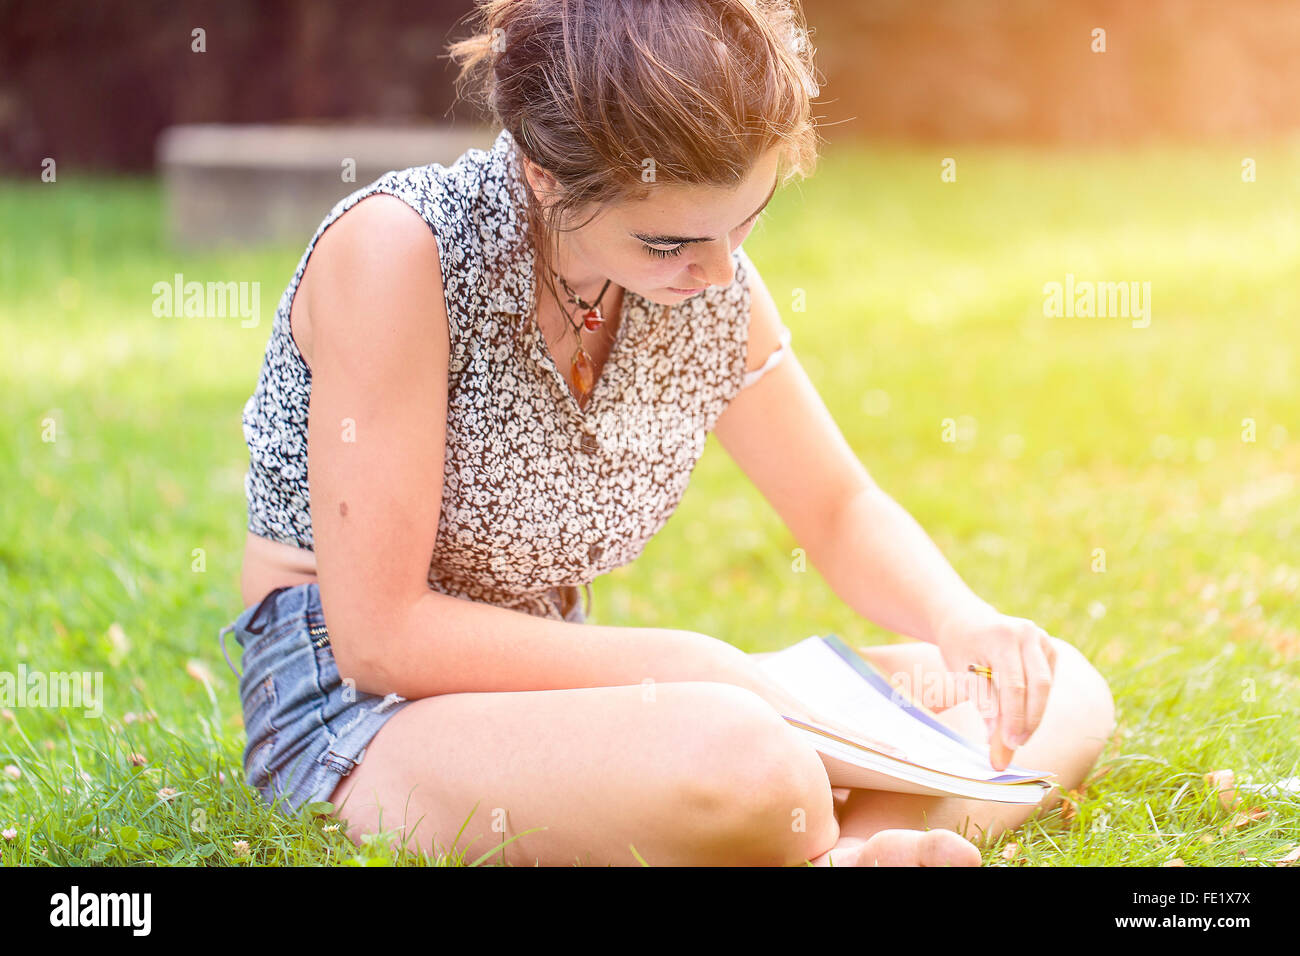 https://c8.alamy.com/comp/FE1X7X/teenage-girl-making-here-homework-sitting-in-a-garden-FE1X7X.jpg